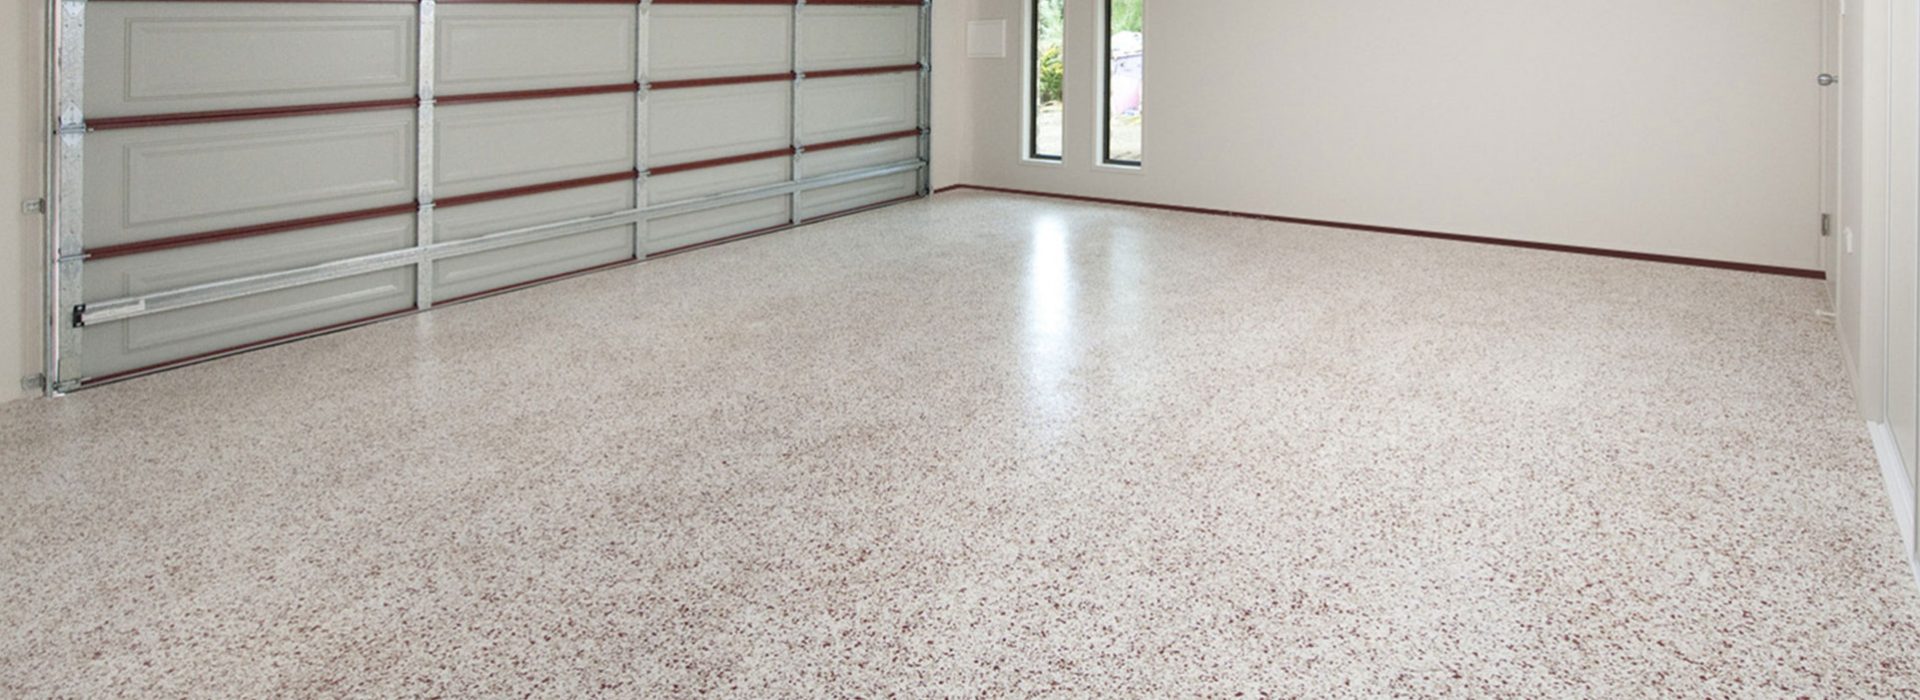 Decorative epoxy floor finish for two car garage